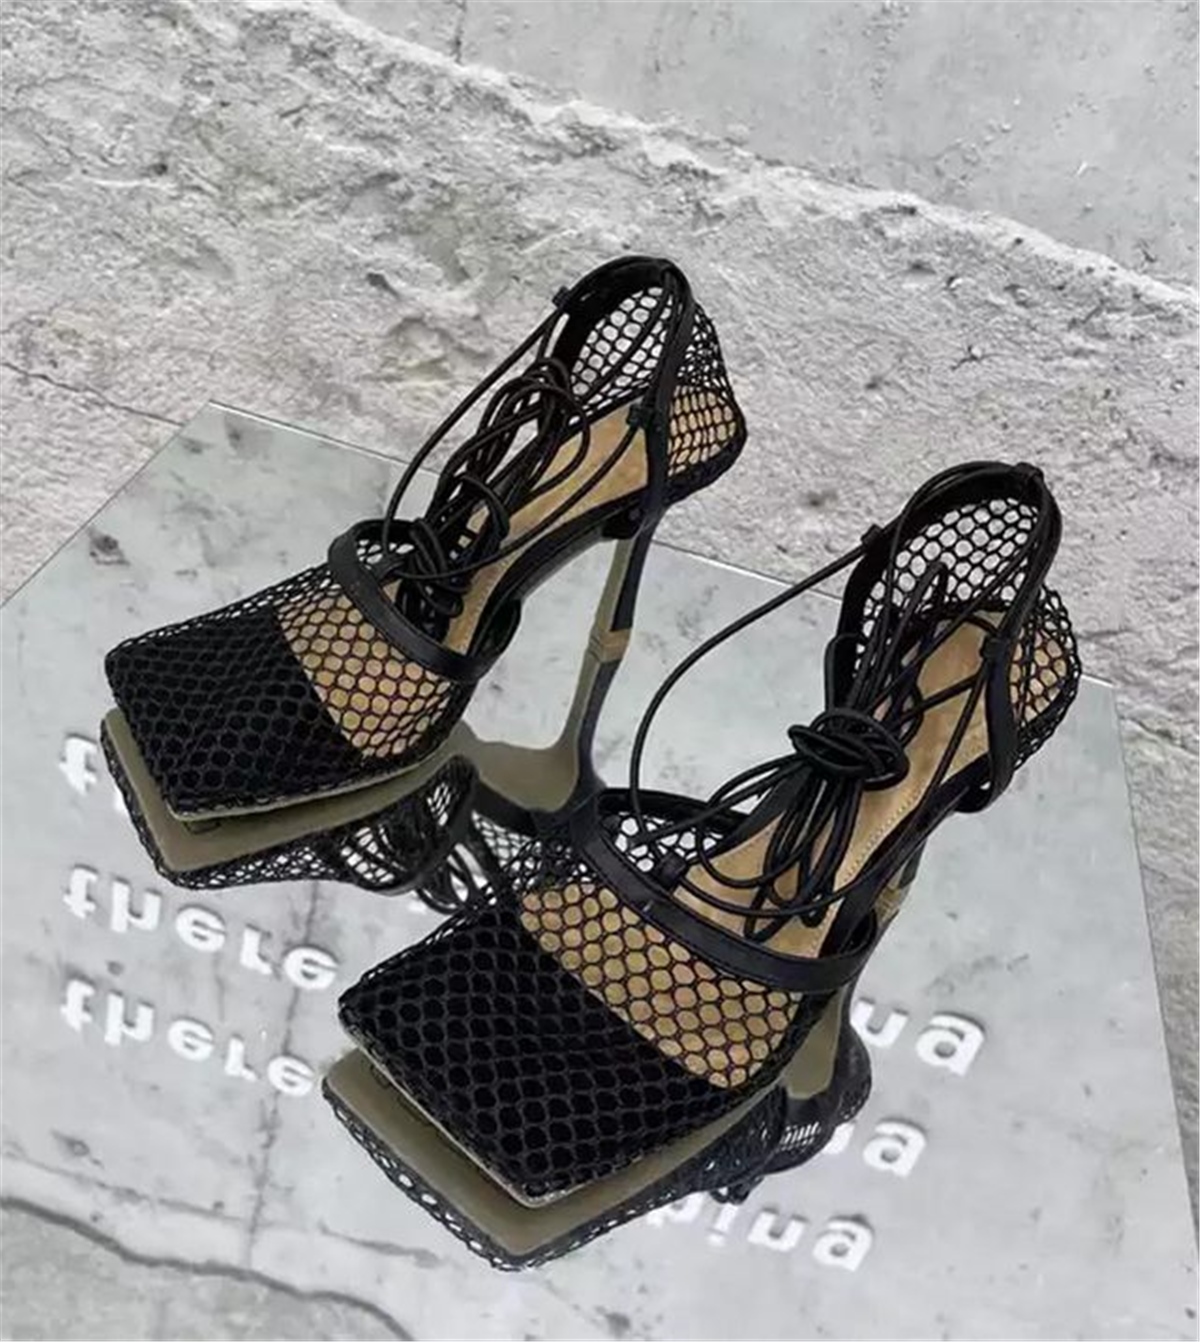 Lacey Topuklu Kadın Ayakkabı Siyah